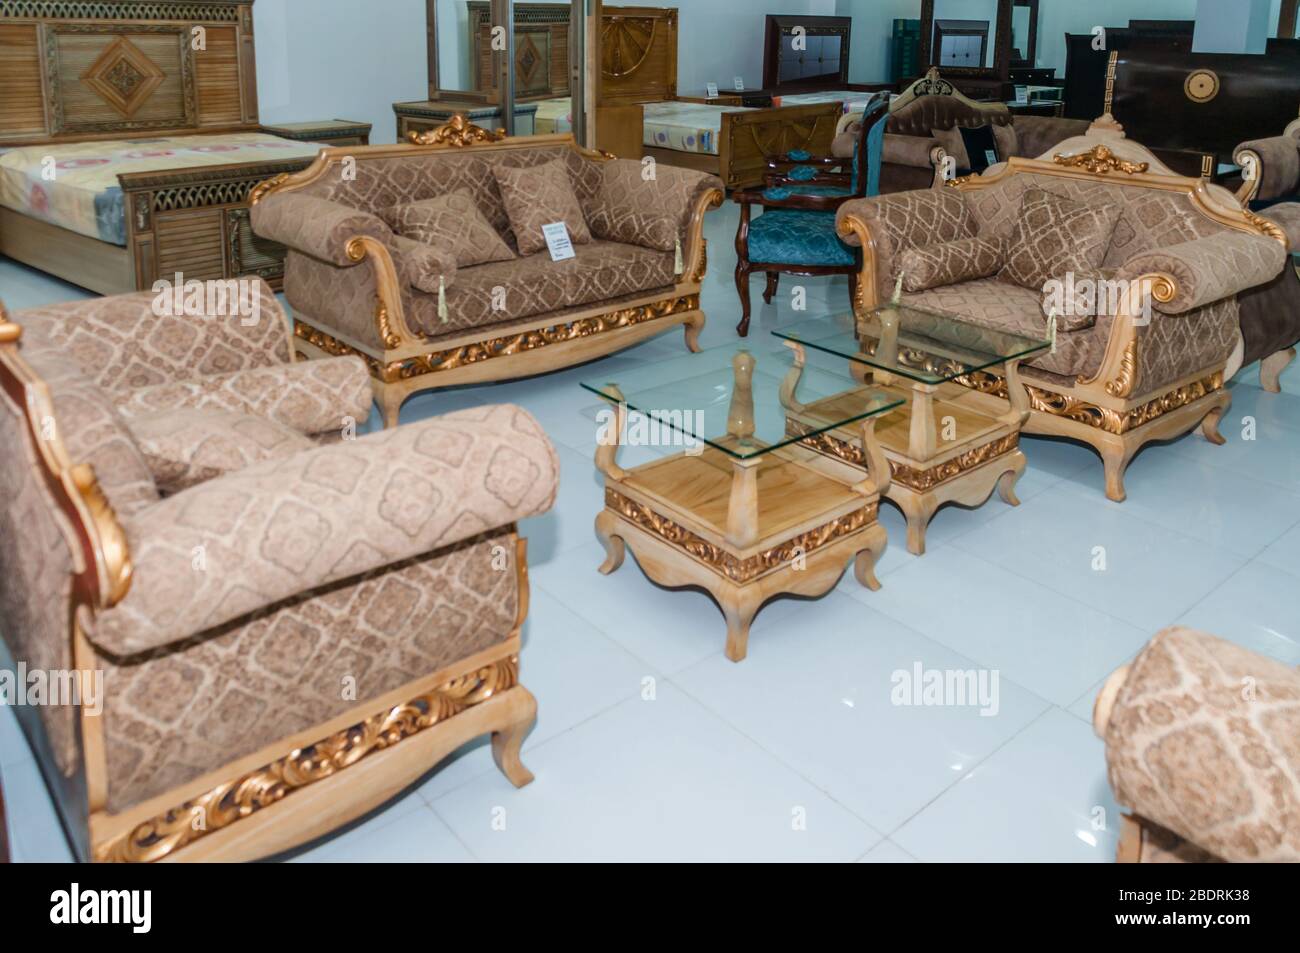 Jhelum, Punjab, Pakistan - January 17, 2020:Stylish living room